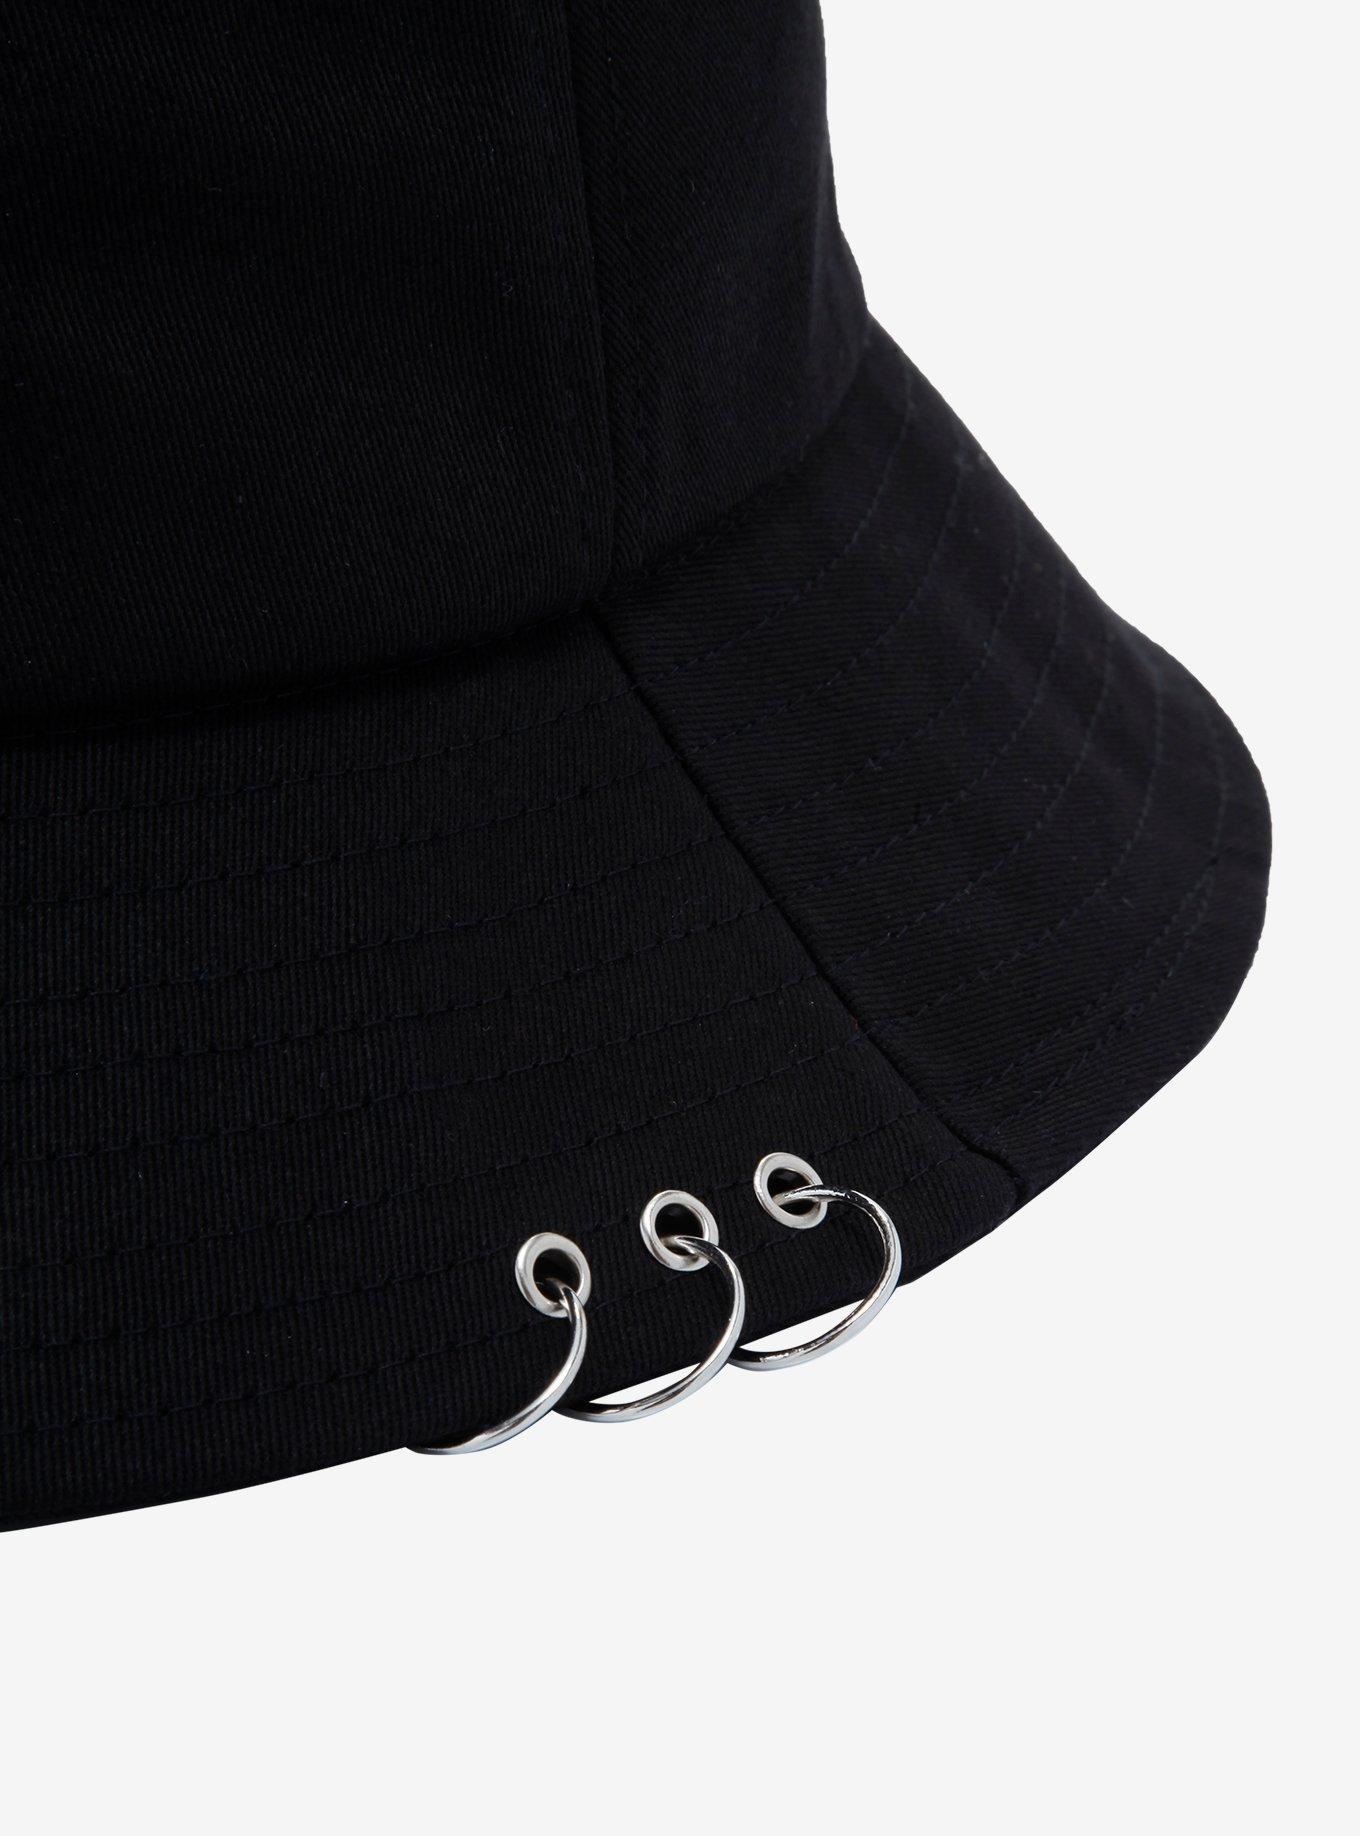 Hoop & Safety Pin Black Bucket Hat, , alternate